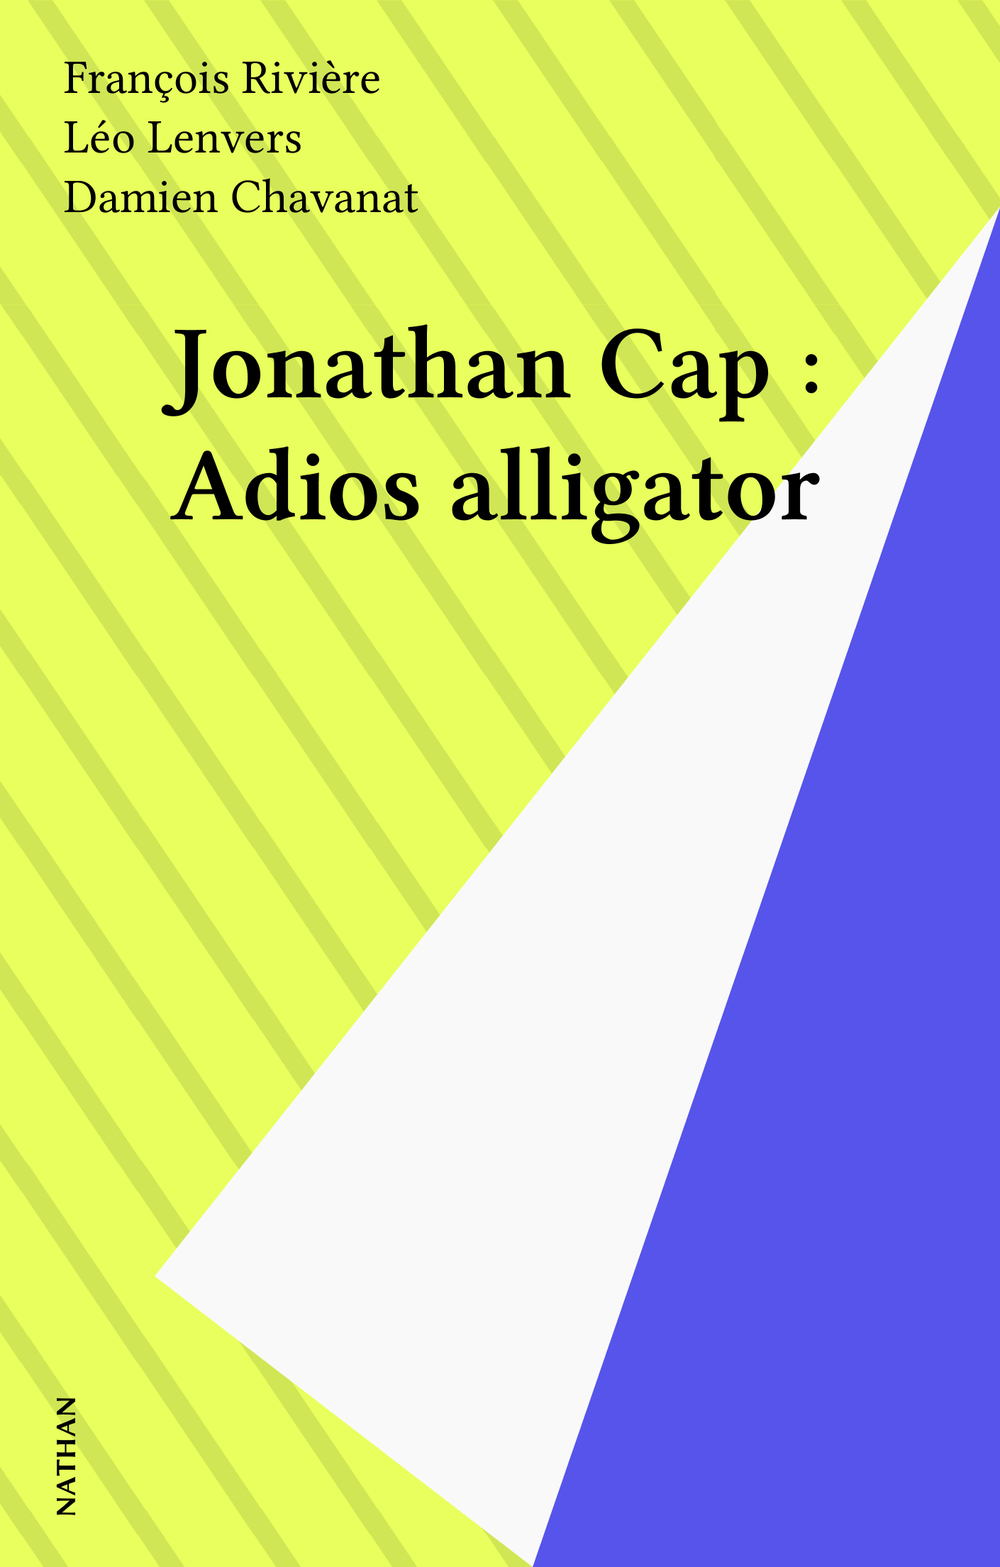 Jonathan Cap : Adios alligator